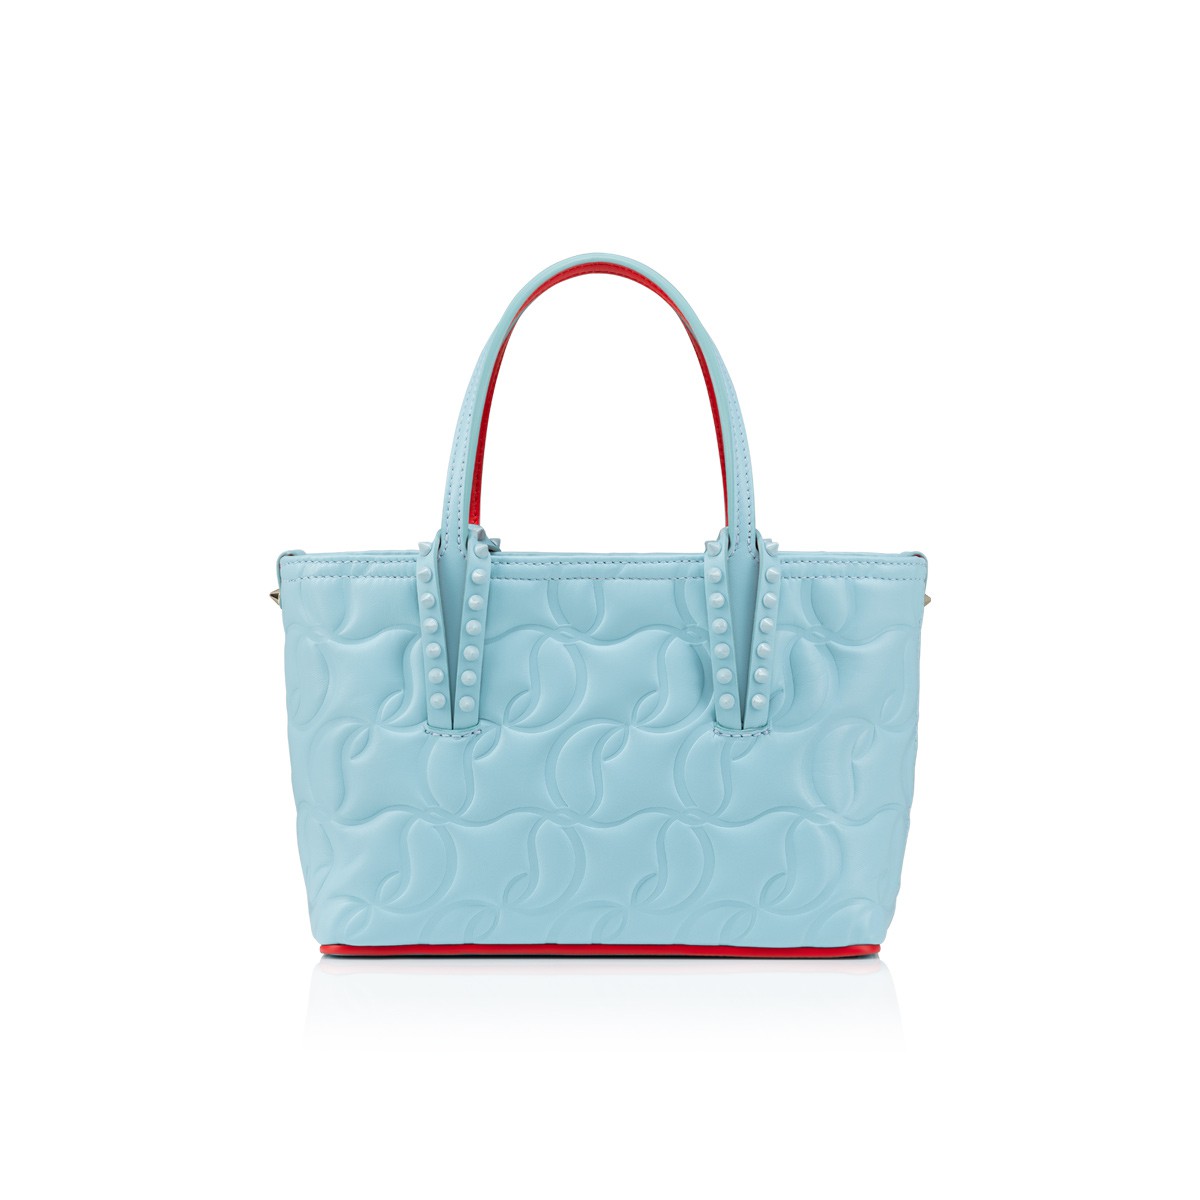 Cabata mini Blue Nappa leather - Handbags - Christian Louboutin